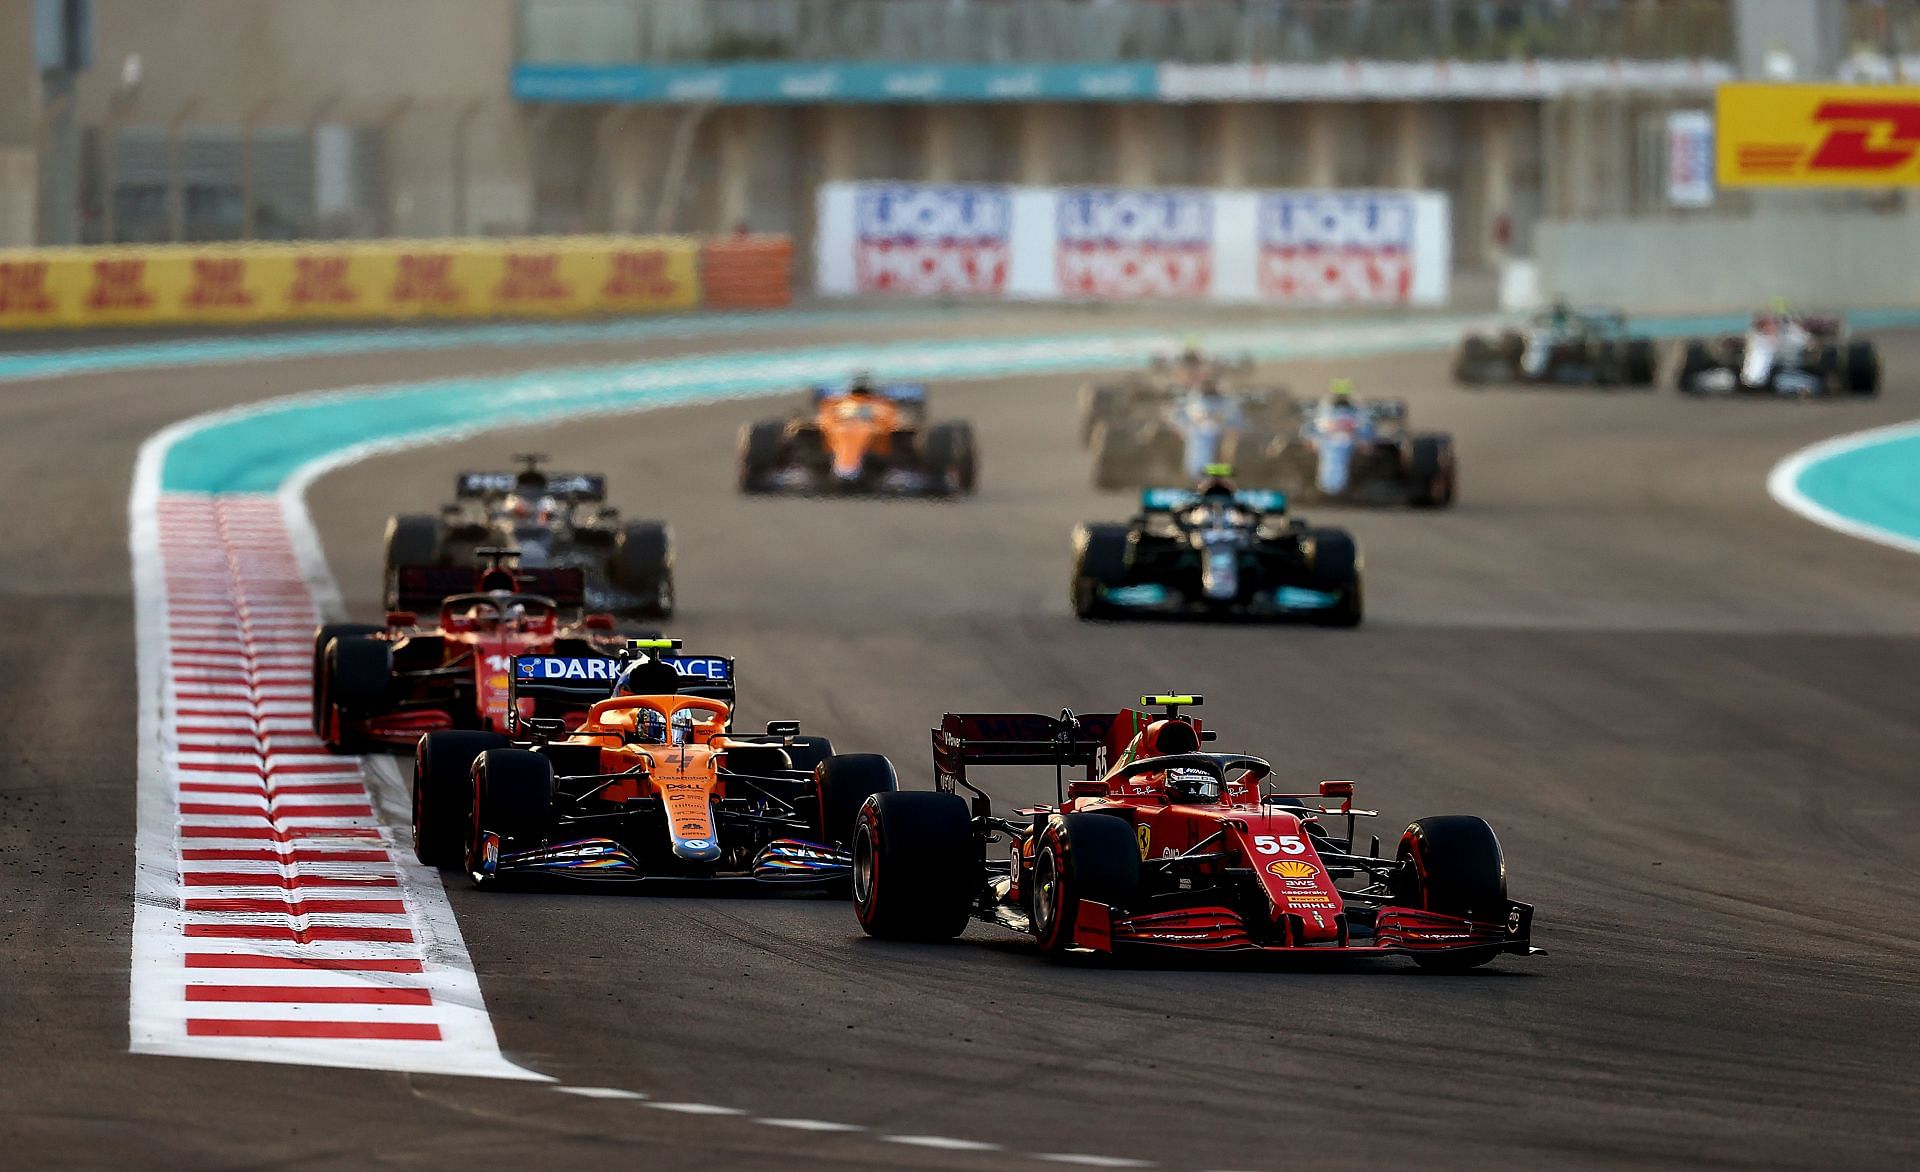 F1 Grand Prix of Abu Dhabi - Lights out at Yas Marina